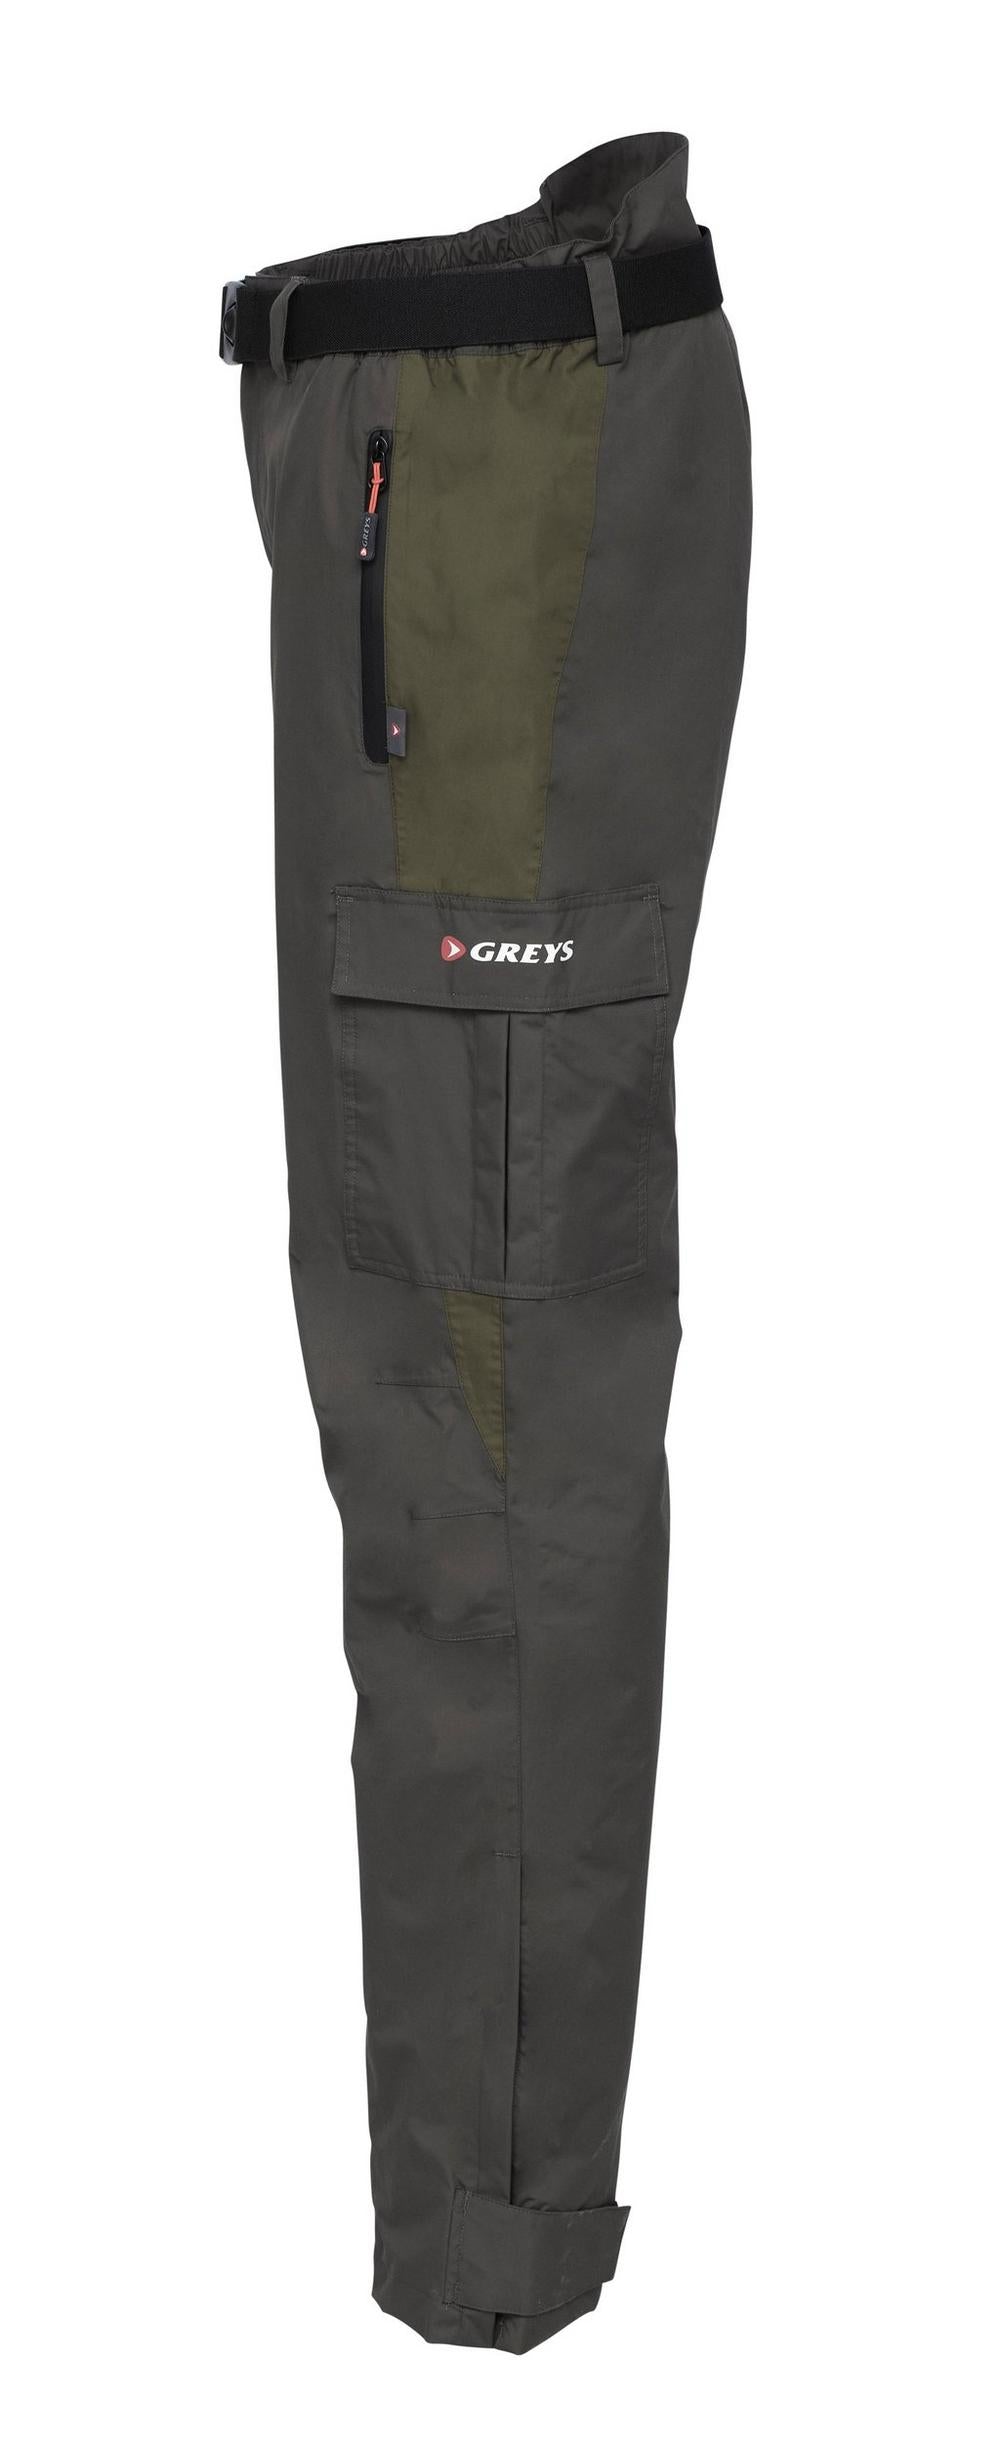 Greys Fin Waterproof Fishing Trousers - SAVE 10